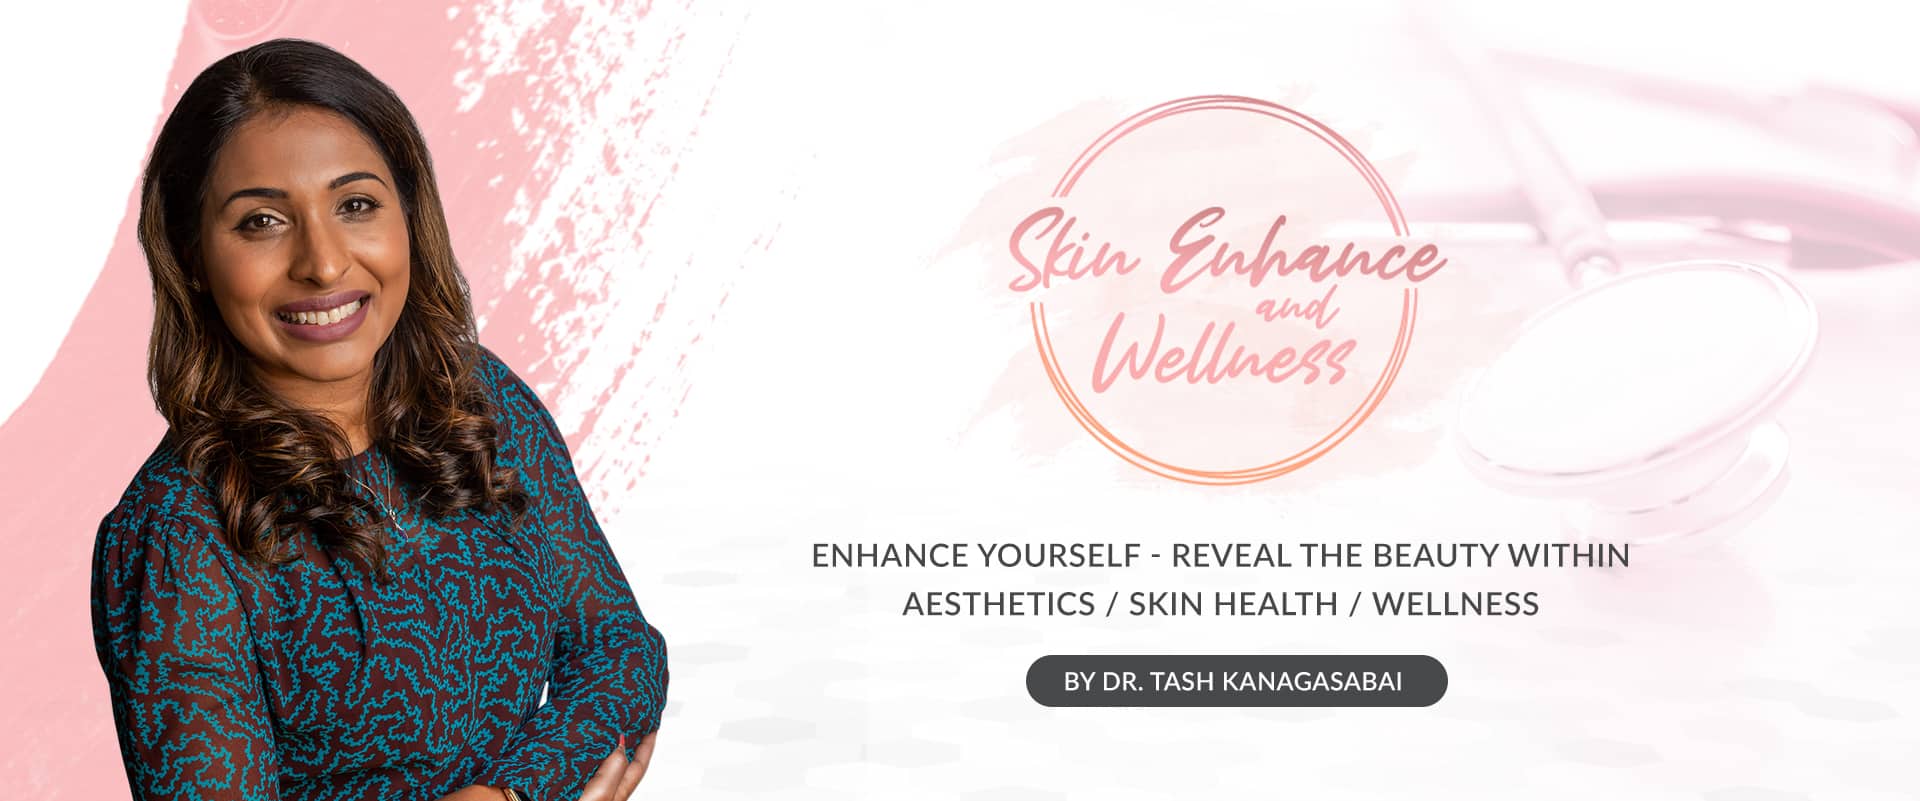 SKin Enhance is a Skin Clinic based in Billericay, Essex.